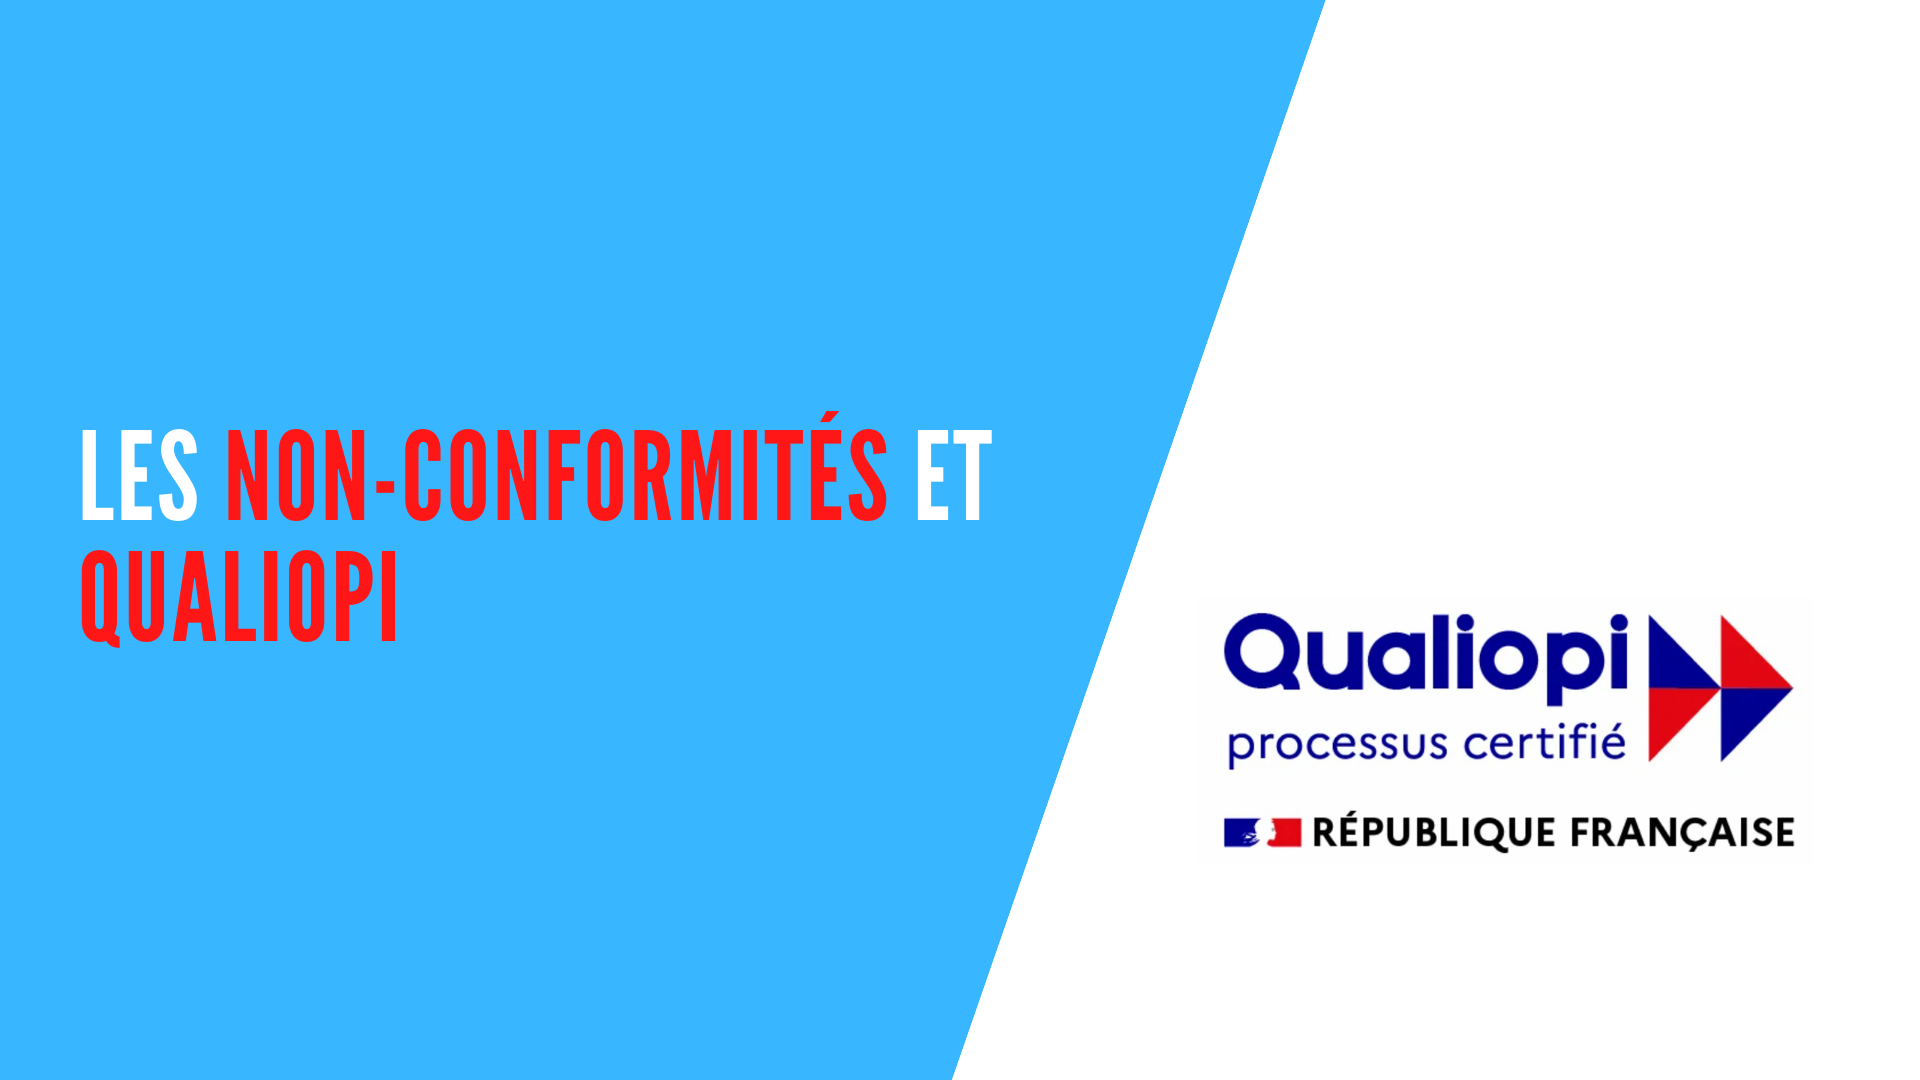 You are currently viewing Les non-conformités et Qualiopi